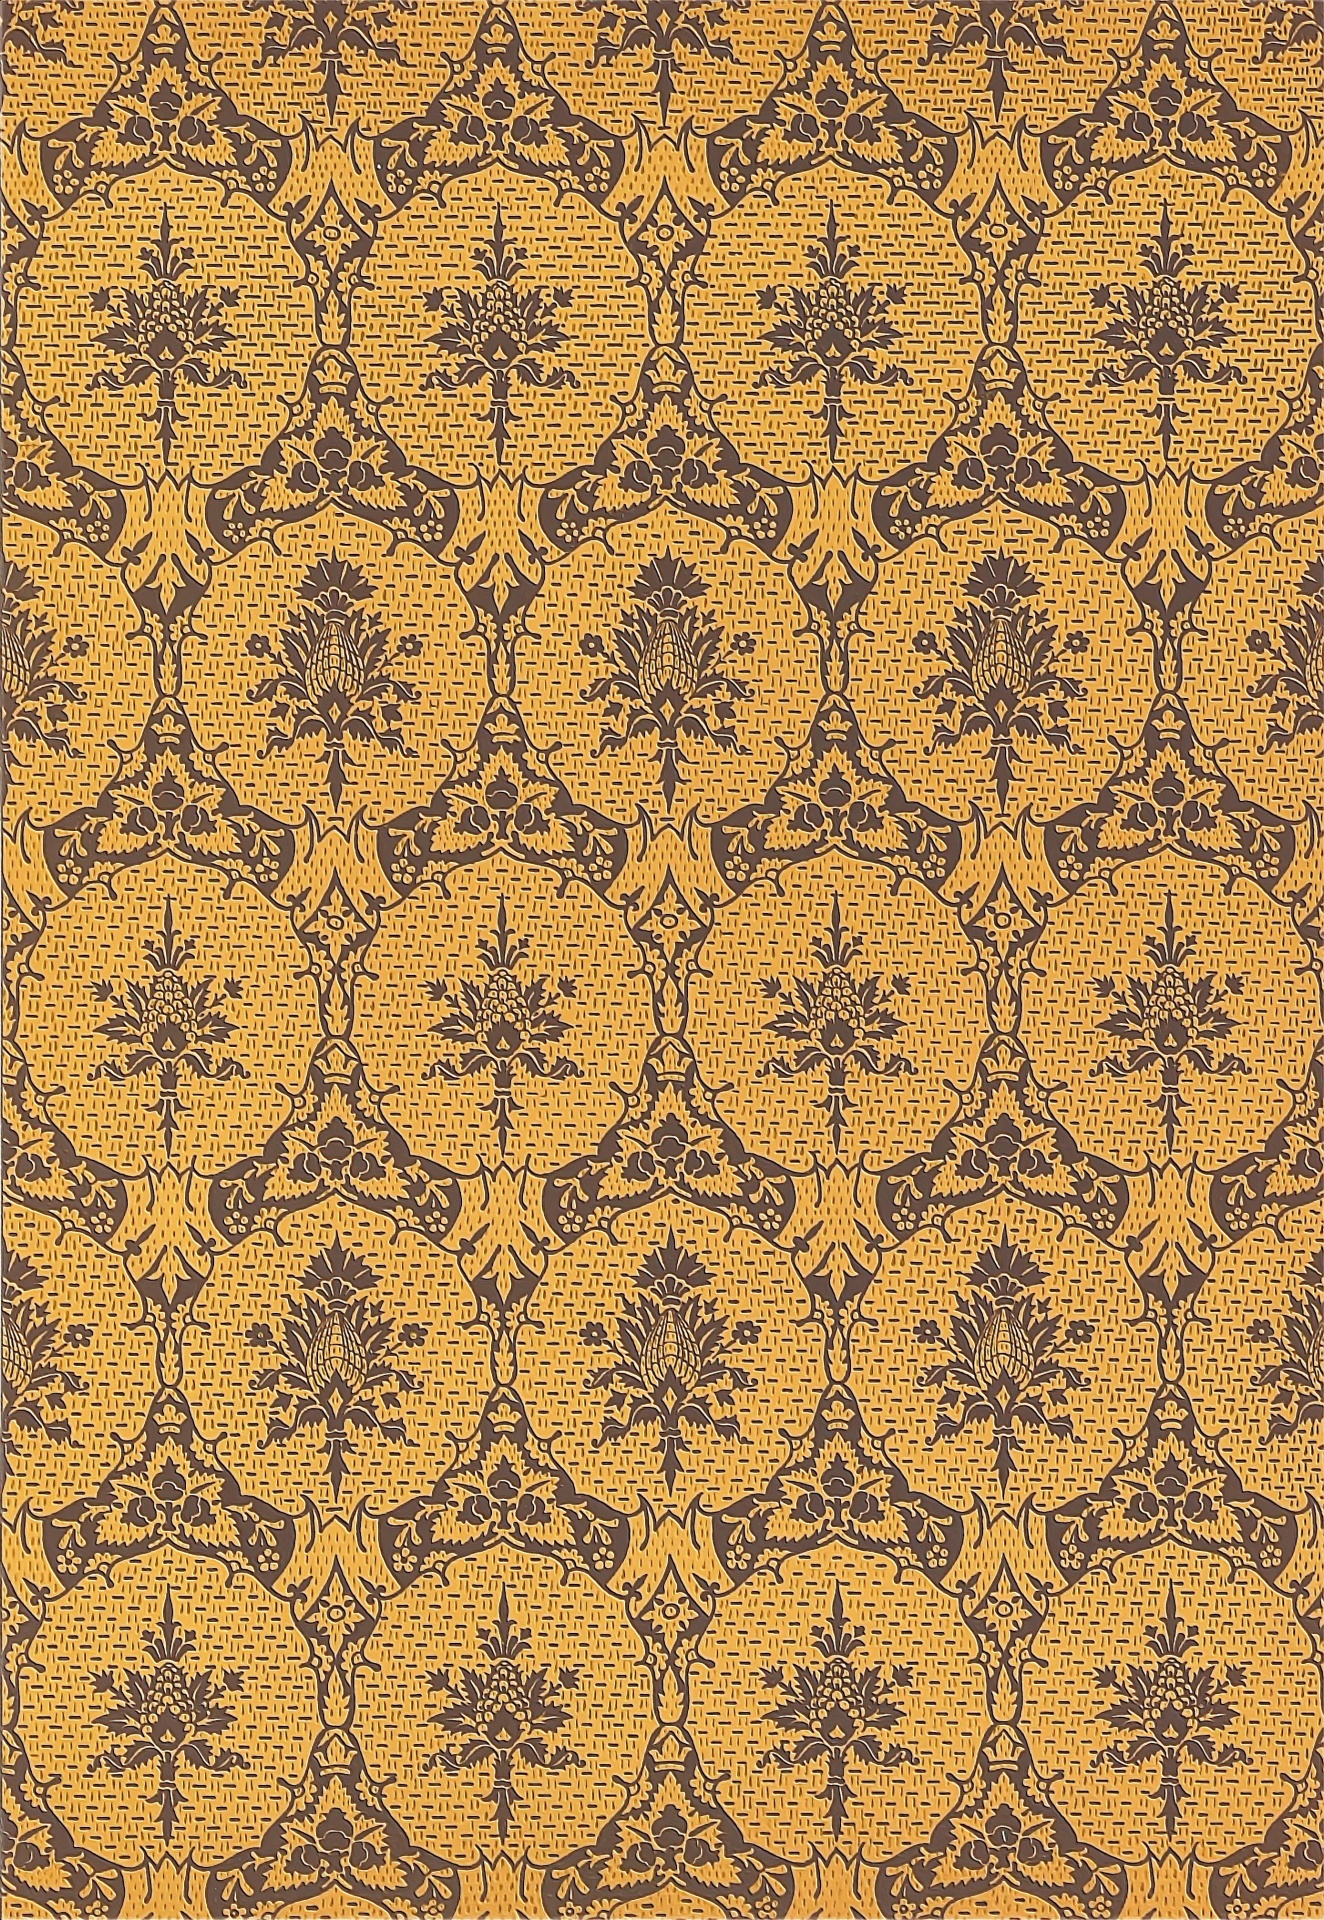 Italian Decorative Pattern Design